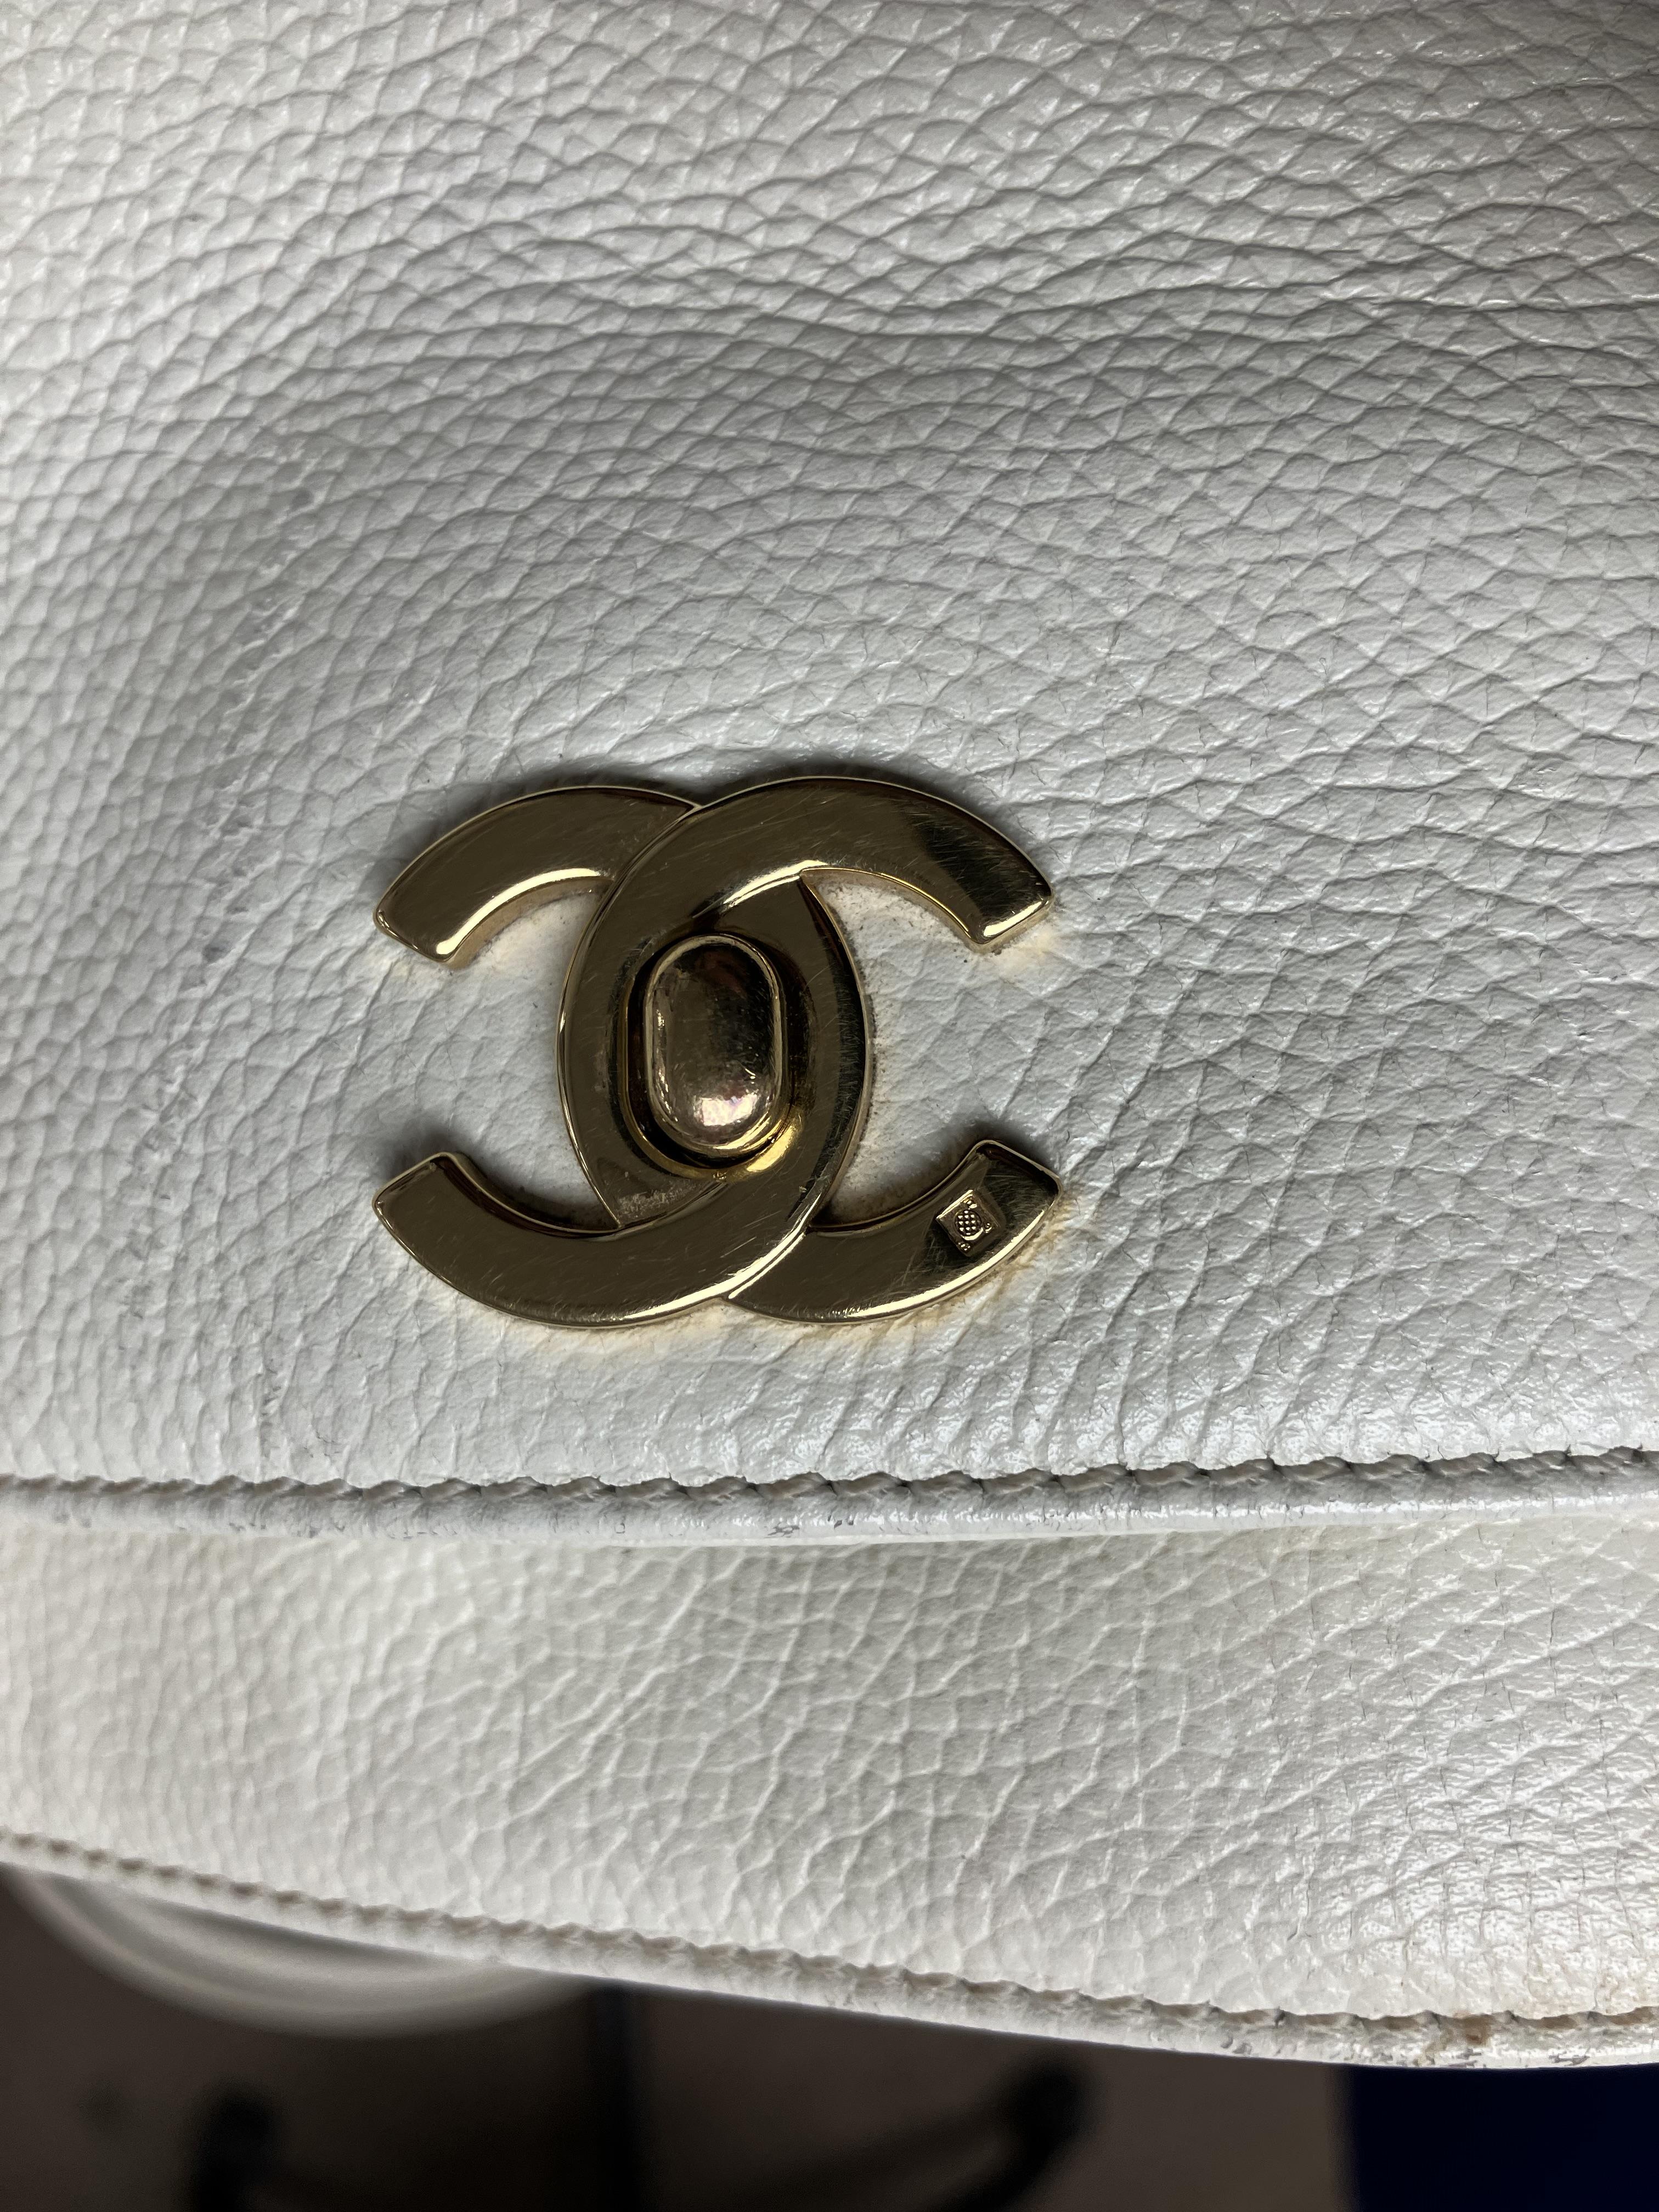 A Chanel Cerf bag in white grain calves - Image 36 of 40